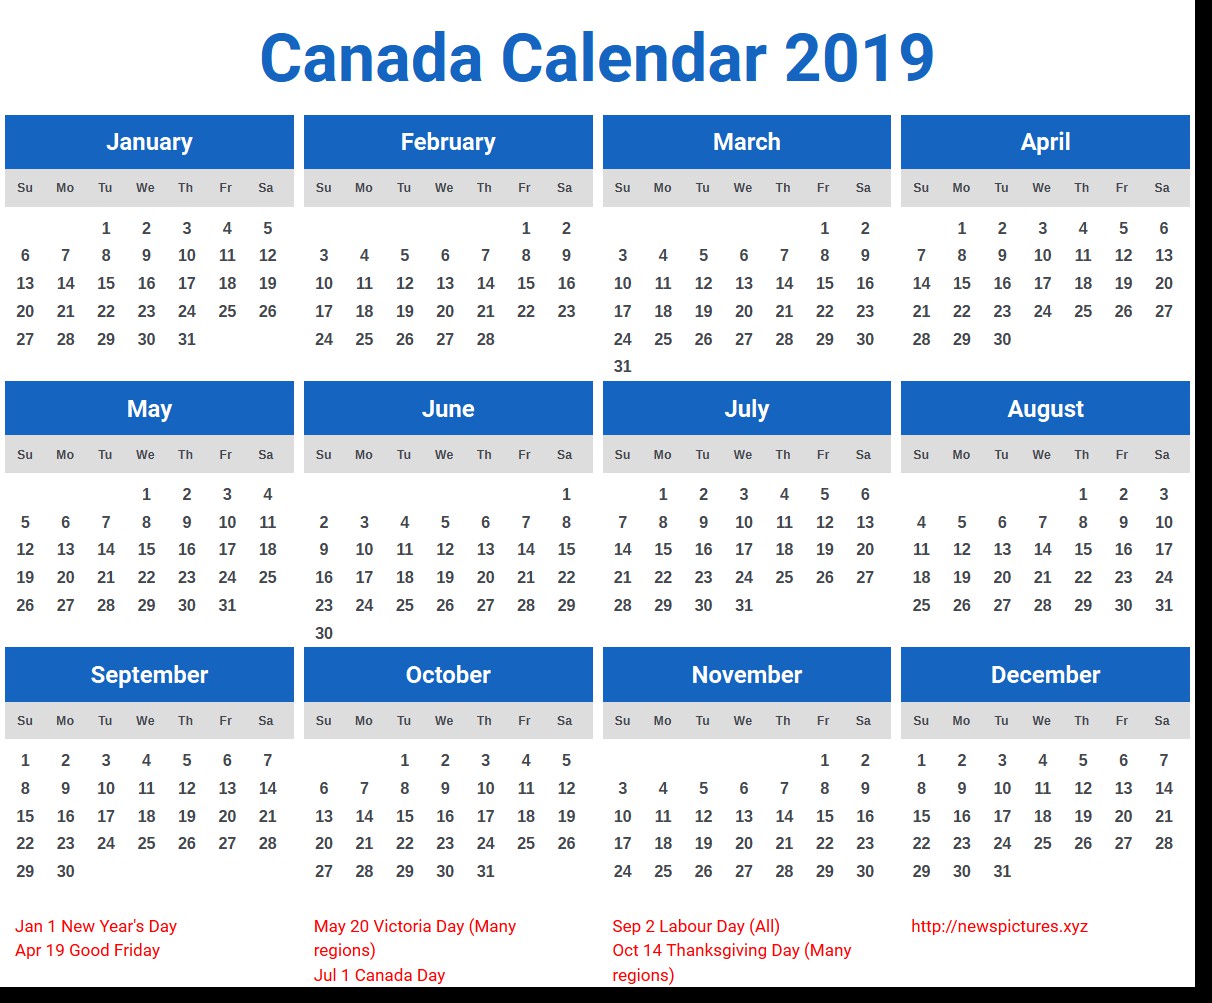 Canada Calendar 2019